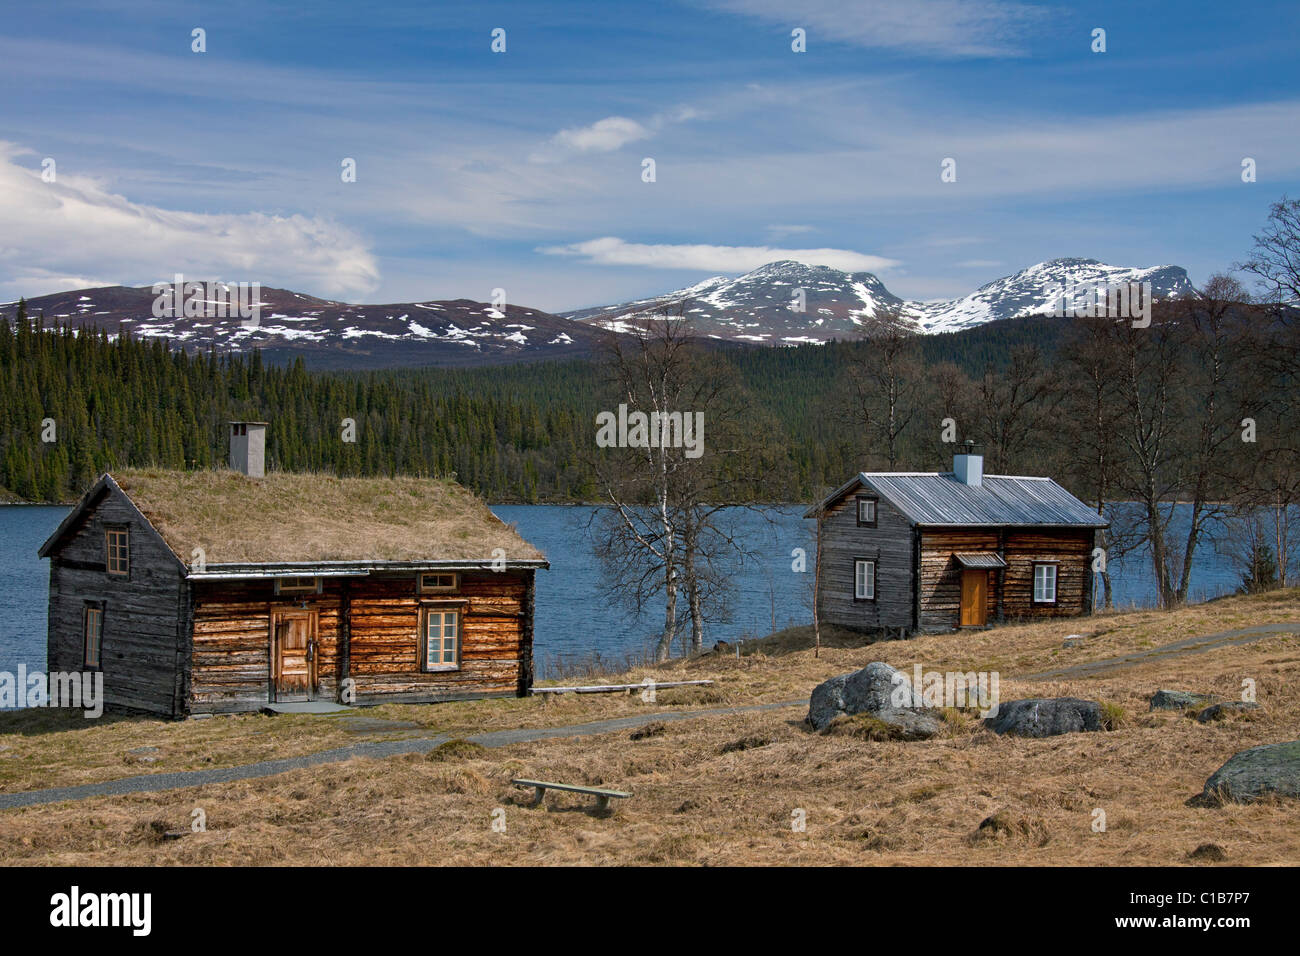 Blockhaus mit Sod Dach entlang See in Fatmomakke, Lappland, Schweden Stockfoto